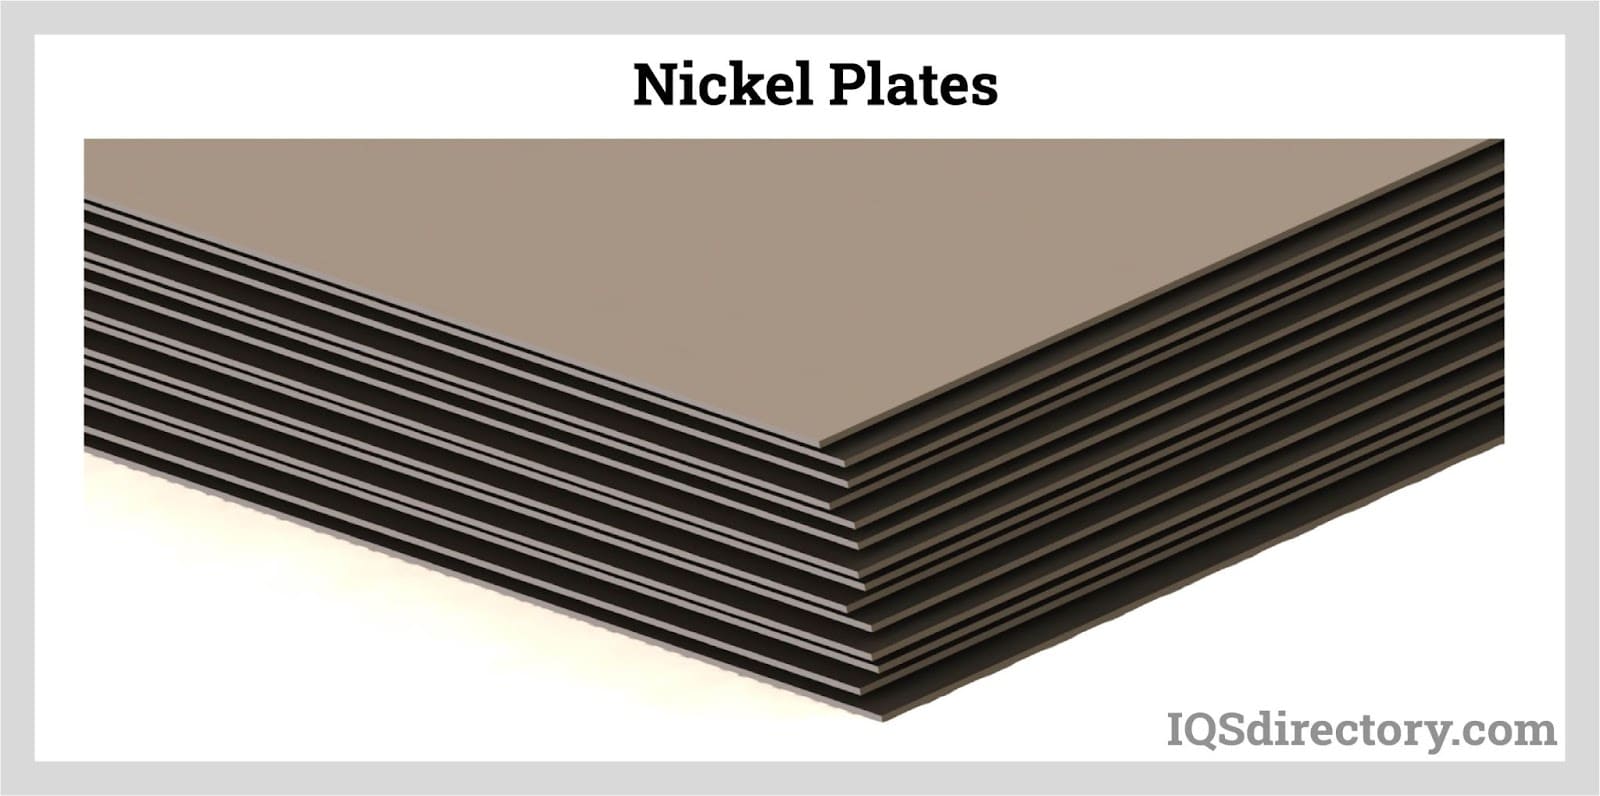 Nickel Plates